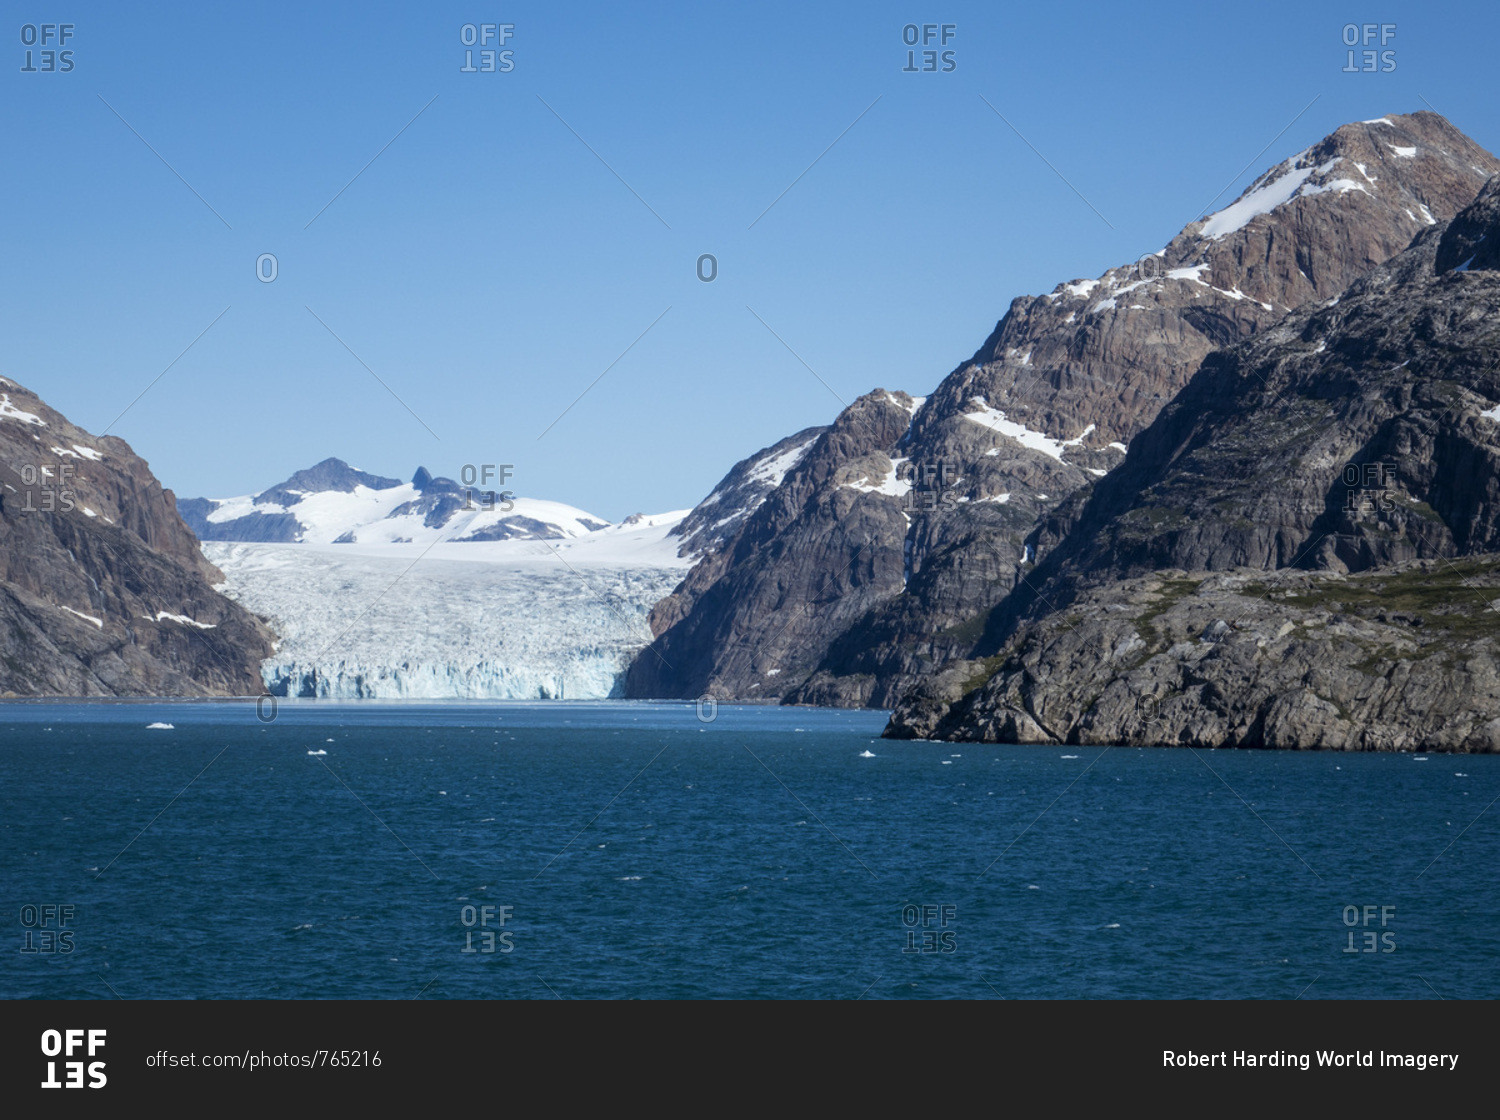 Glacier, Prince Christian Sound, southern Greenland, Polar Regions